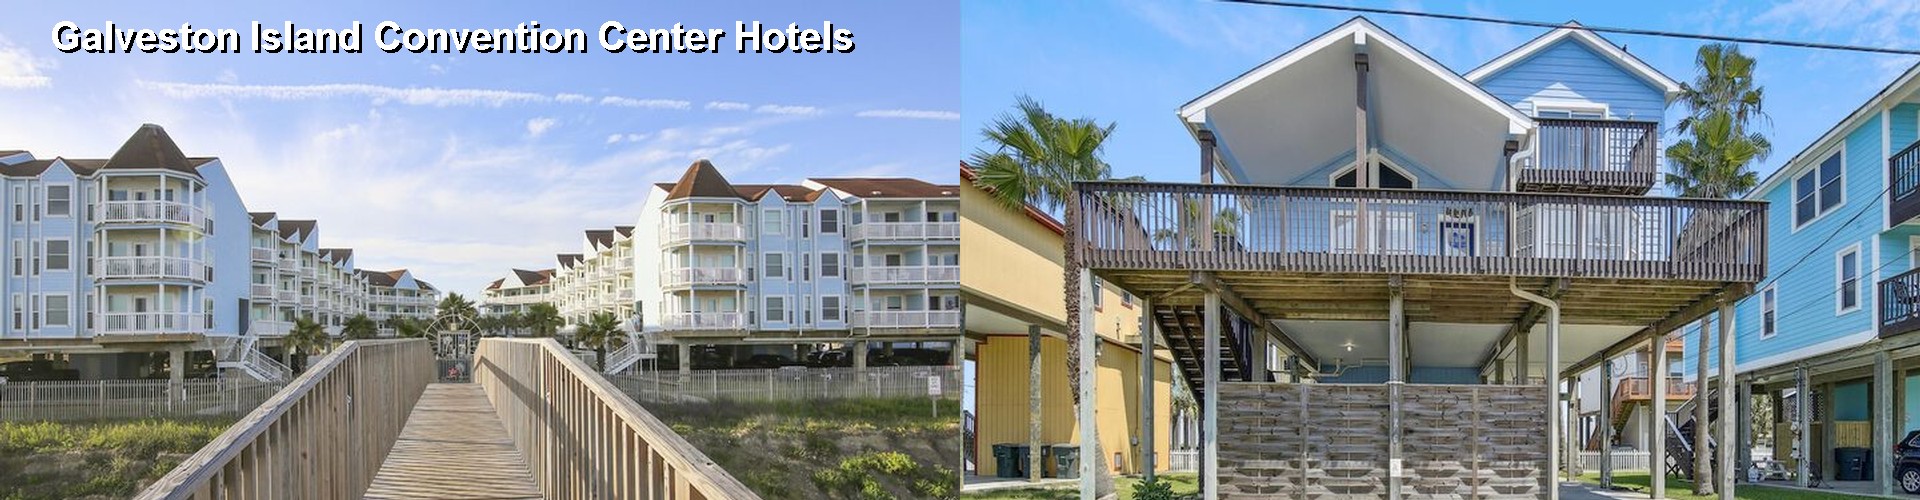 5 Best Hotels near Galveston Island Convention Center